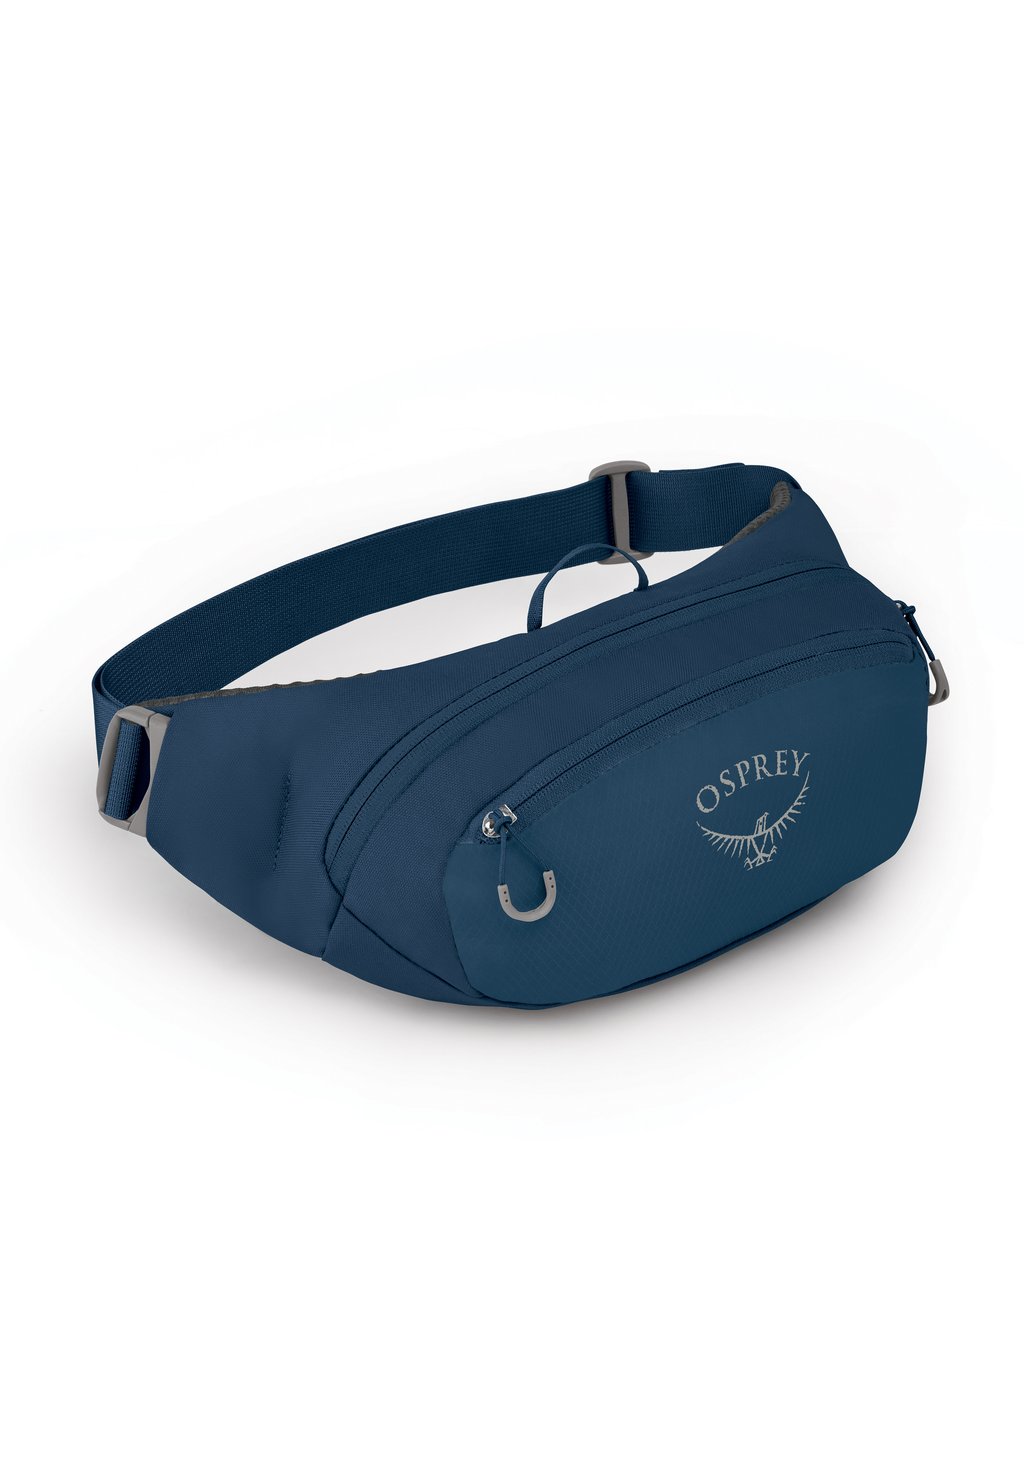 Поясная сумка Daylite Osprey, цвет wave blue цена и фото